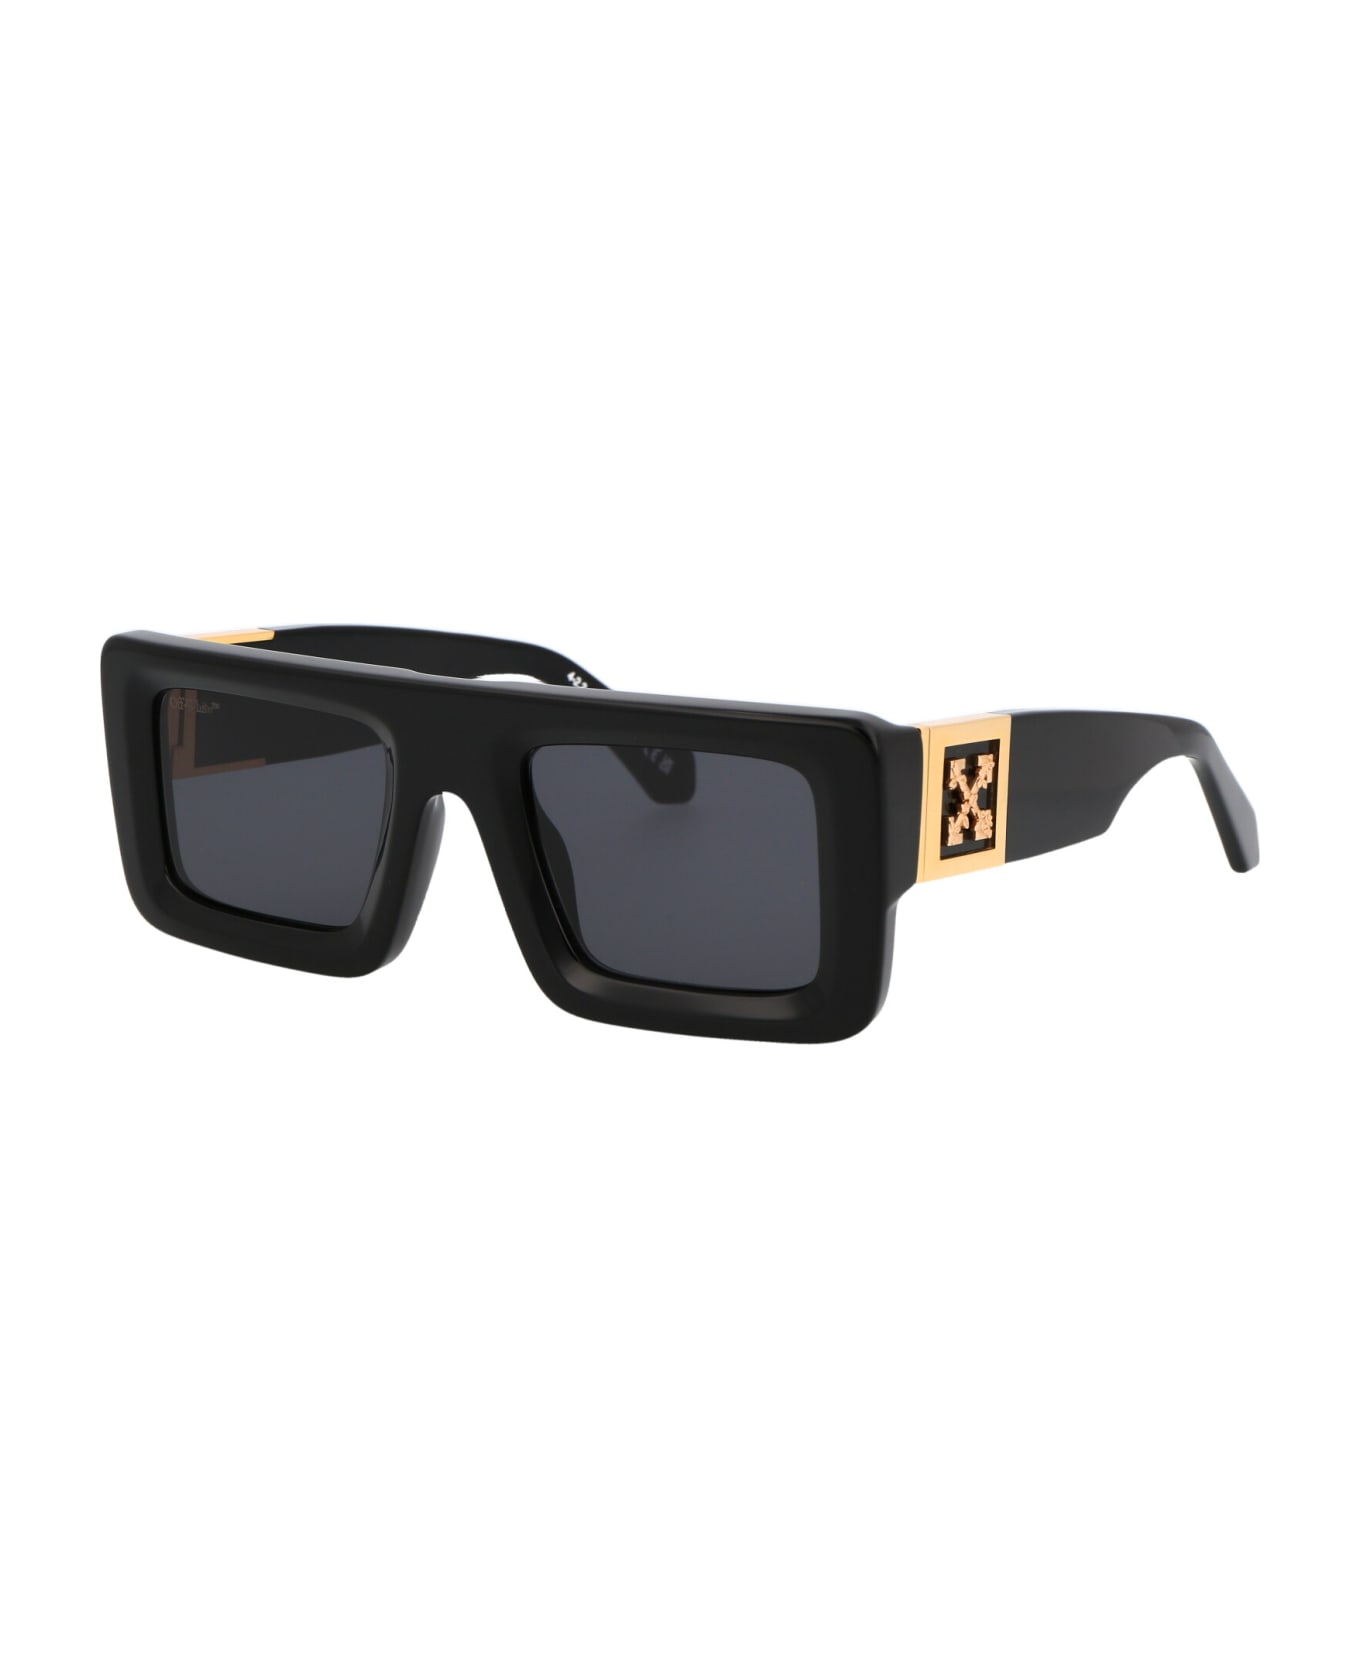 Off-White Leonardo Sunglasses - 1007 BLACK DARK GREY